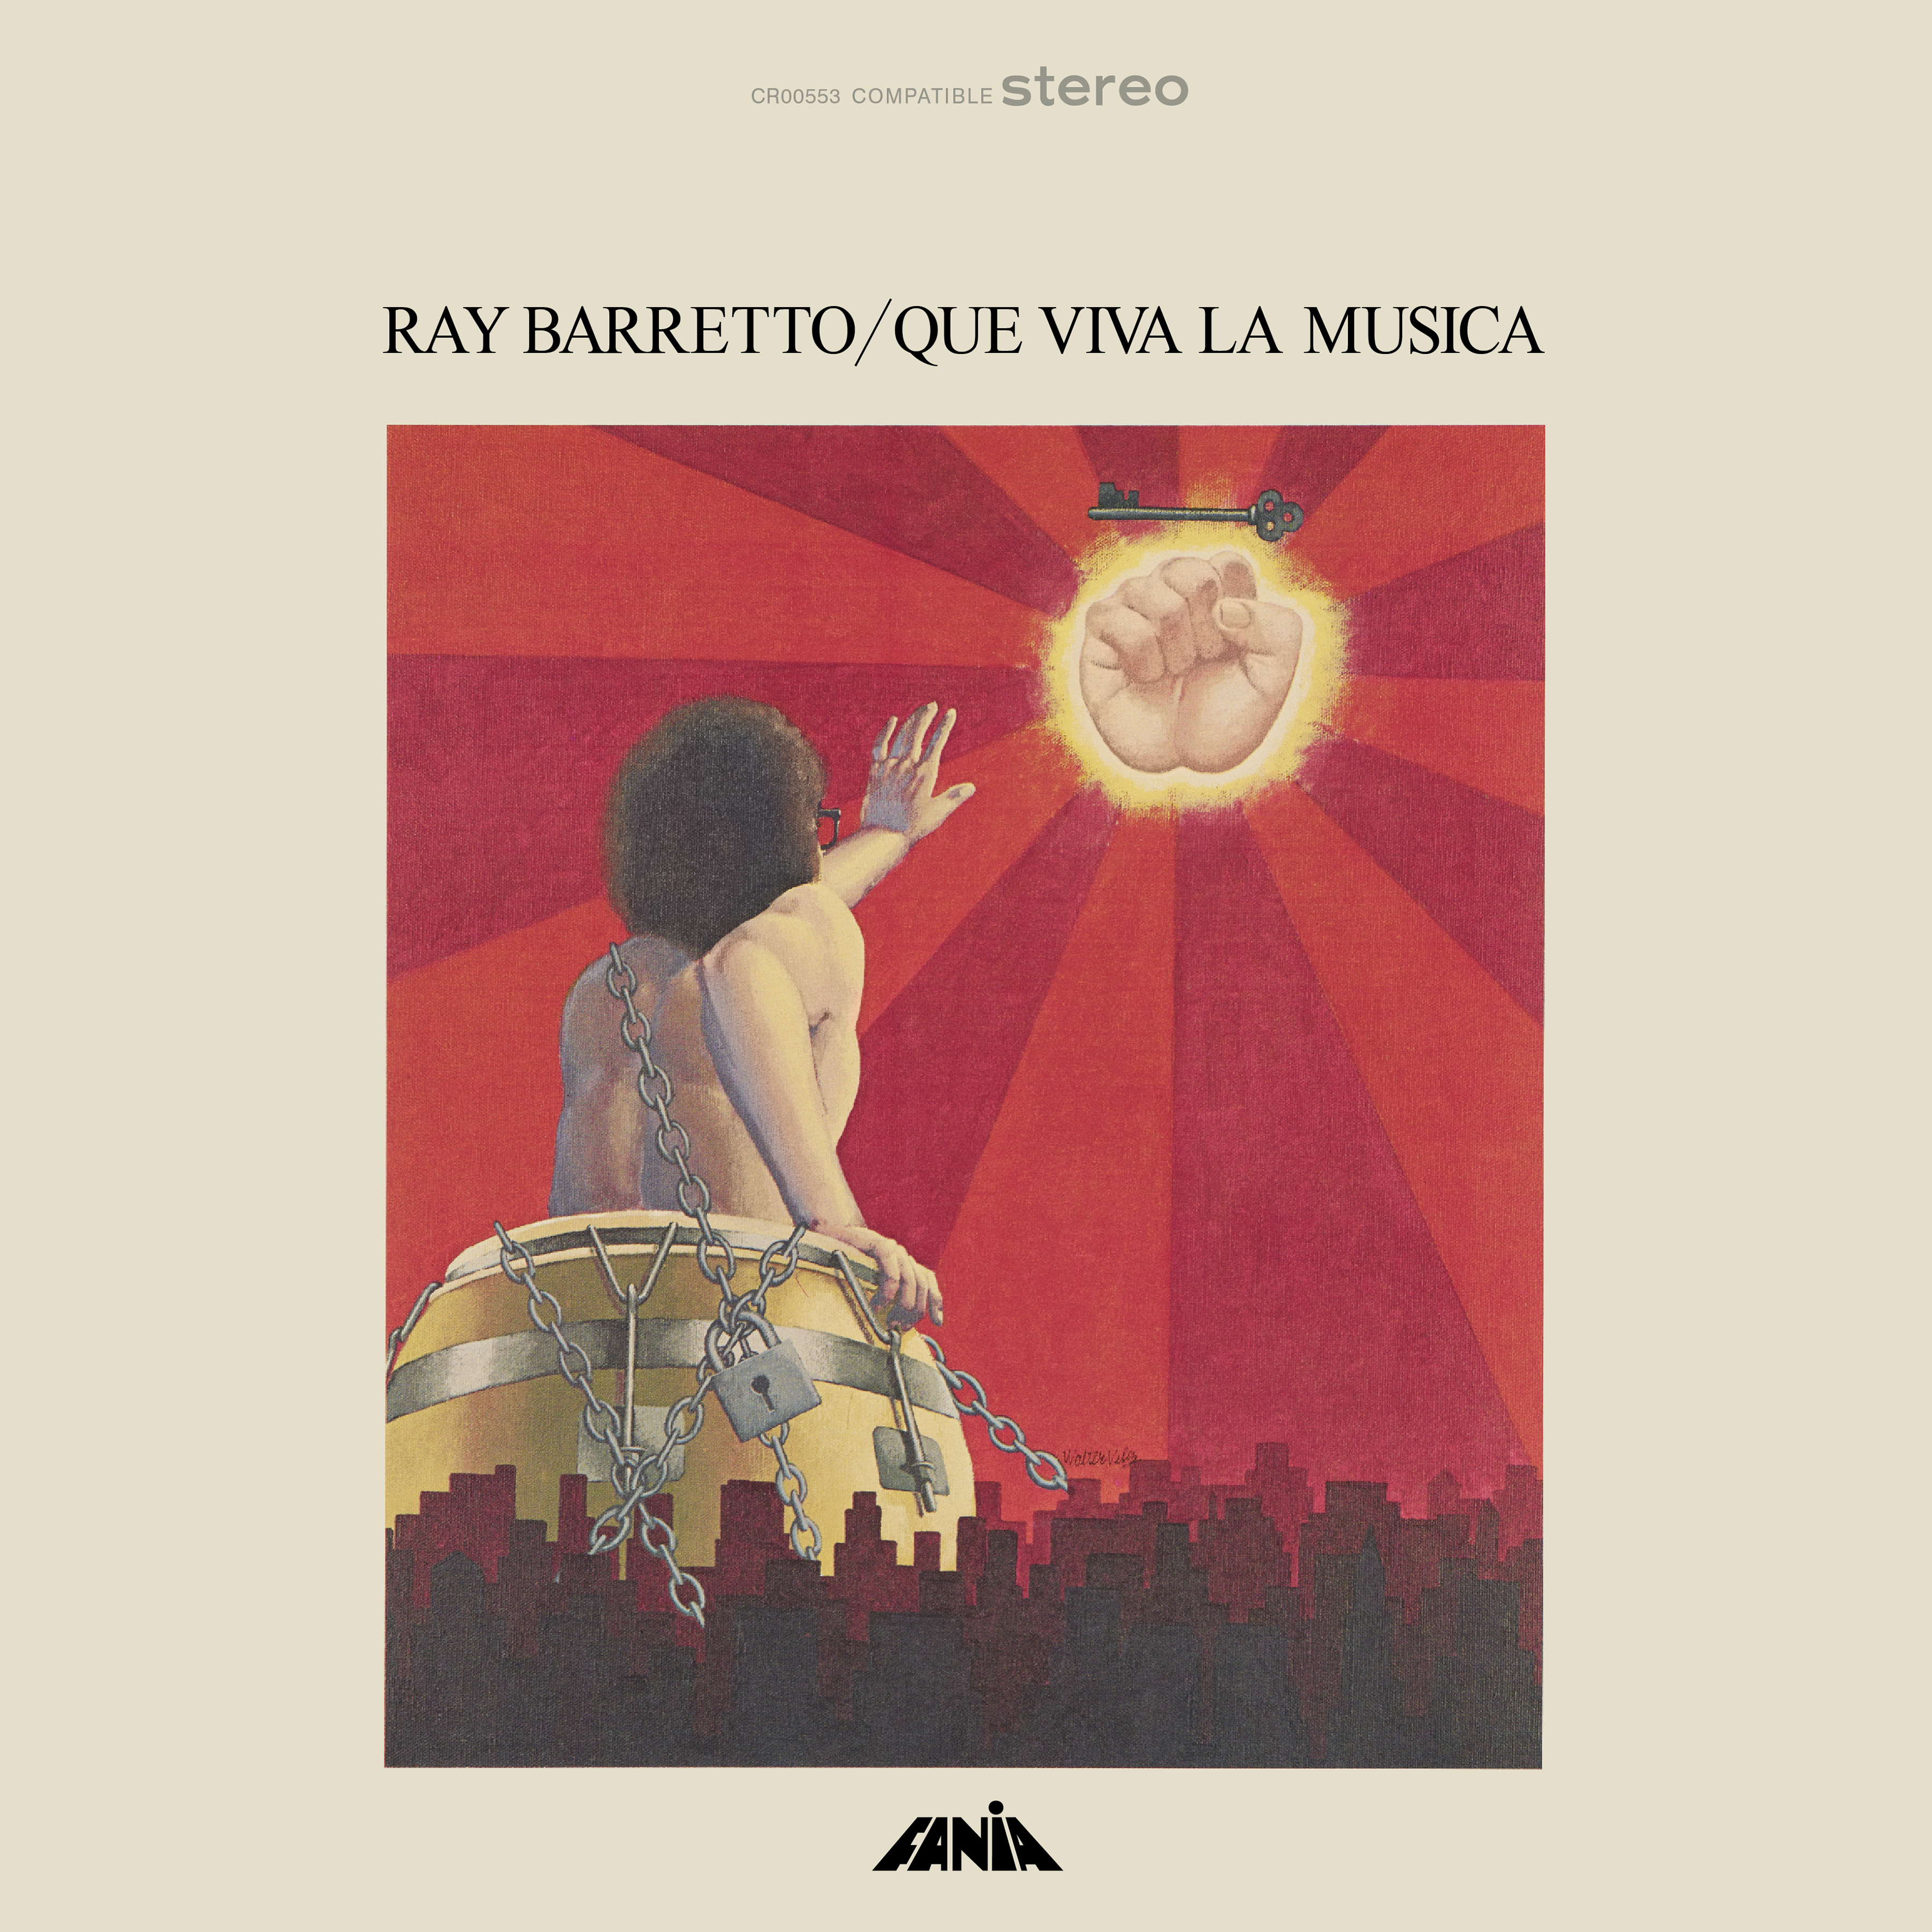 RAY BARRETTO'S LONG-OUT-OF-PRINT SALSA ALBUM, QUE VIVA LA MÚSICA